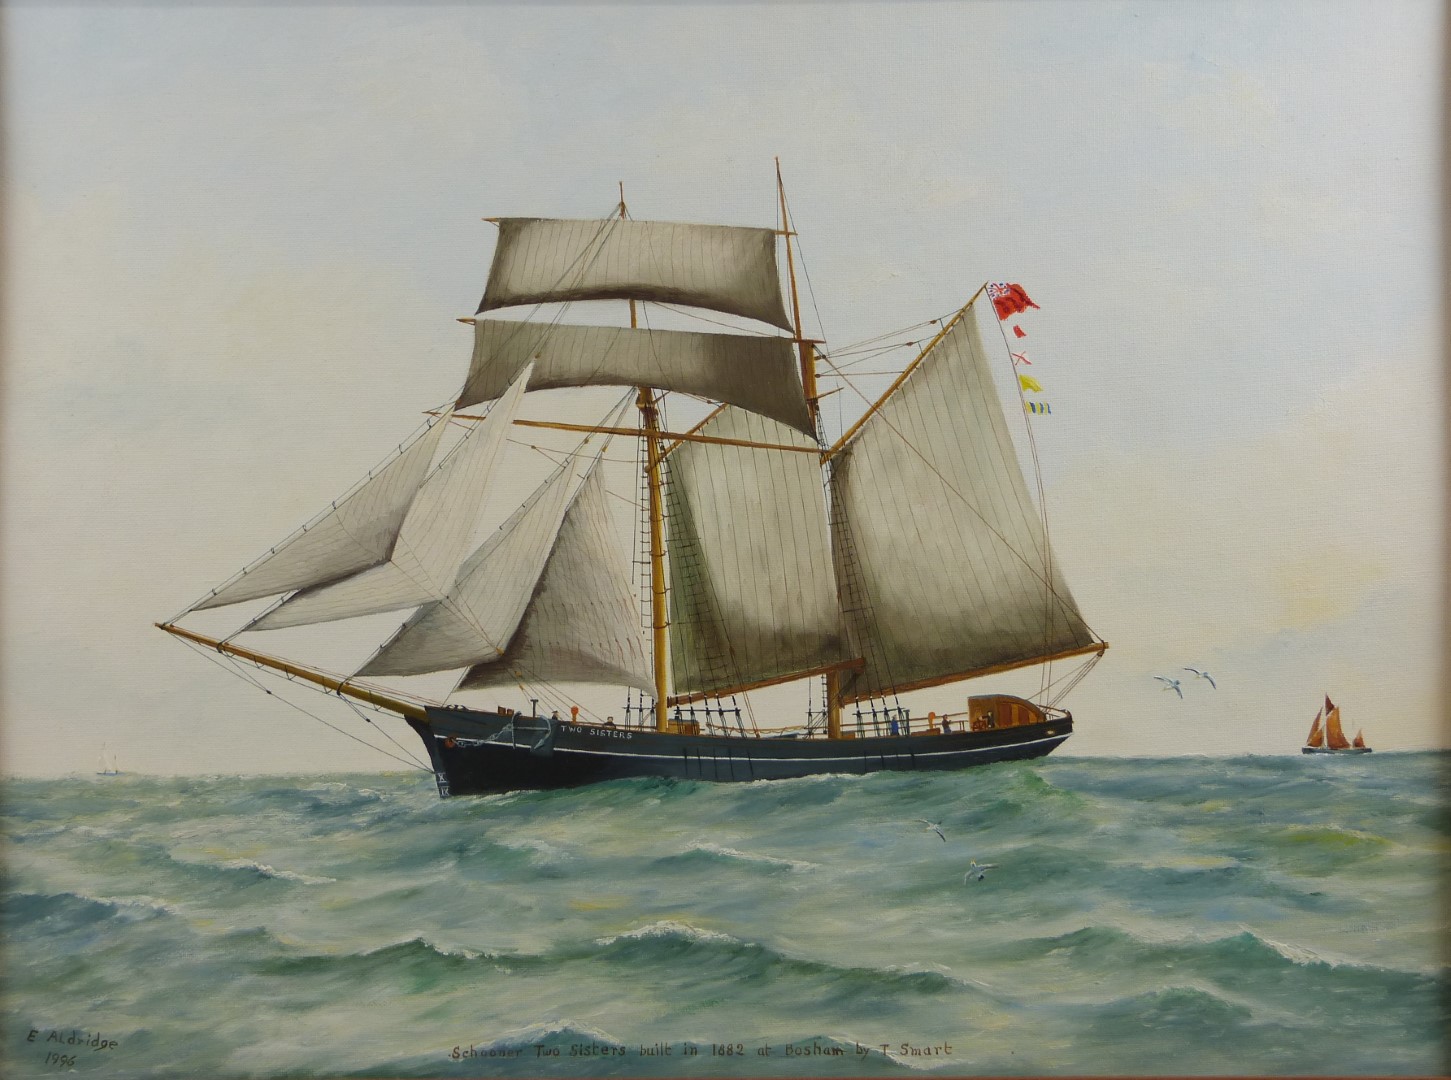 Eric Aldridge (Arlingham, Gloucestershire) two acrylic on board maritime studies, one depicting